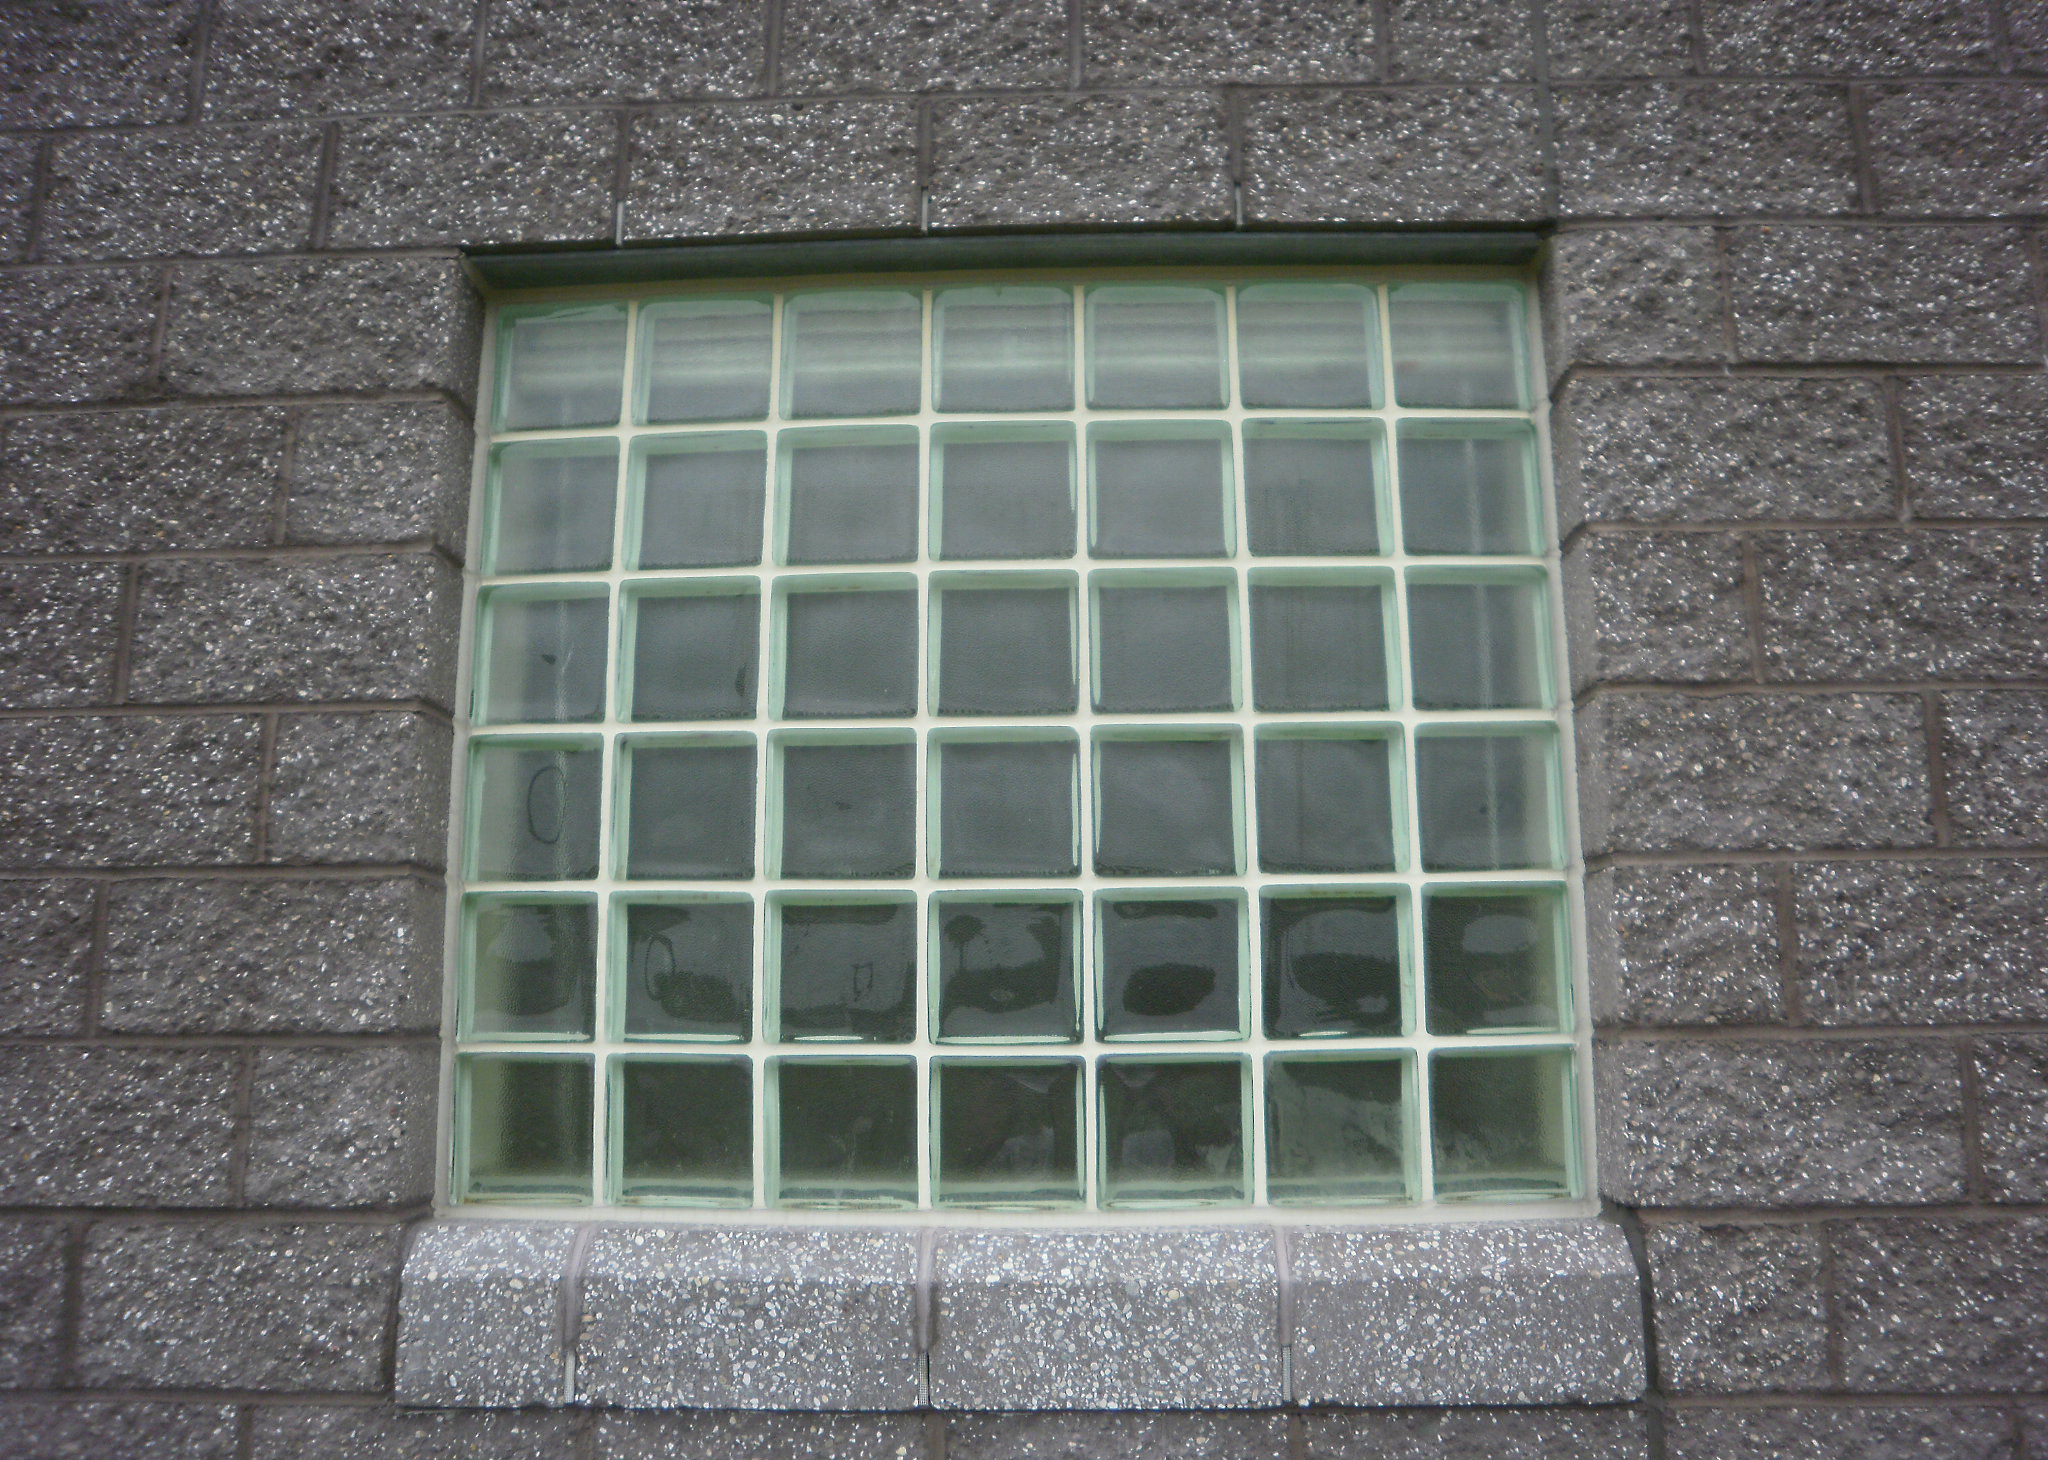 detention security glass block windows